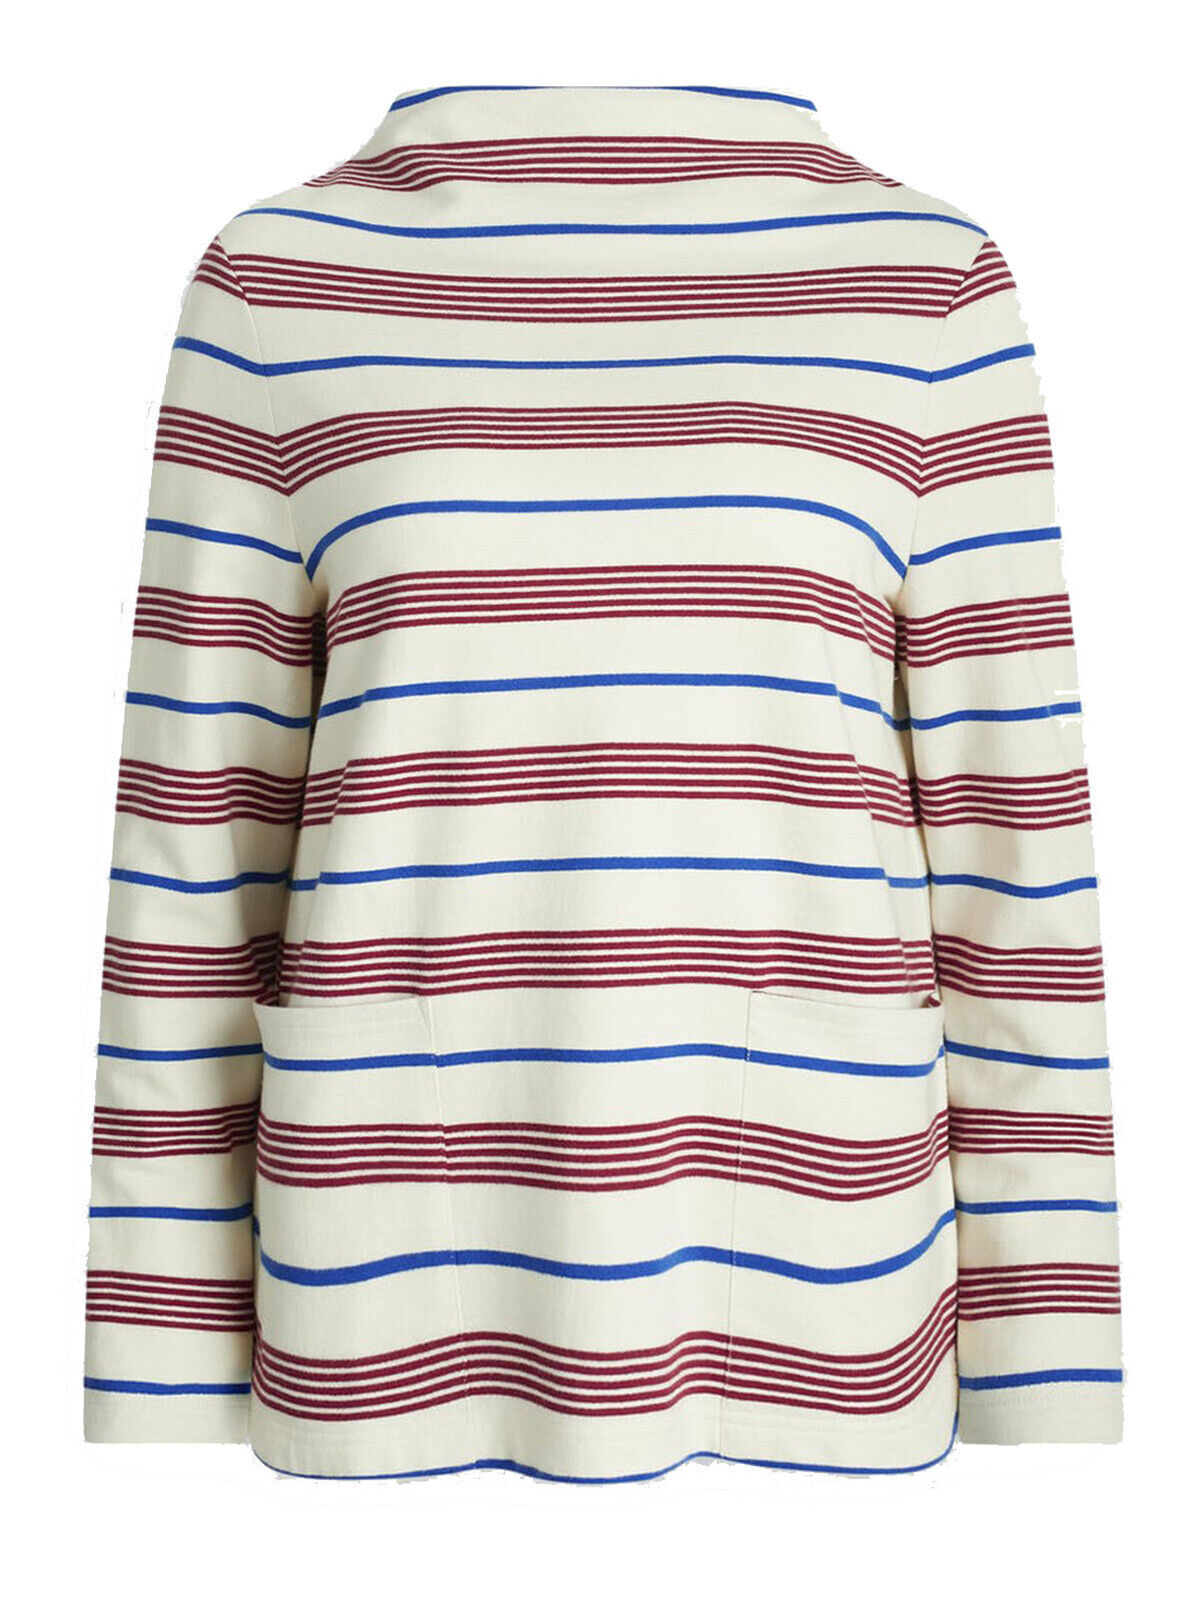 EX SEASALT Ivory Stripe Oceangoing Sweatshirt Sizes 8, 10, 14, 16, 26/28 RRP £45